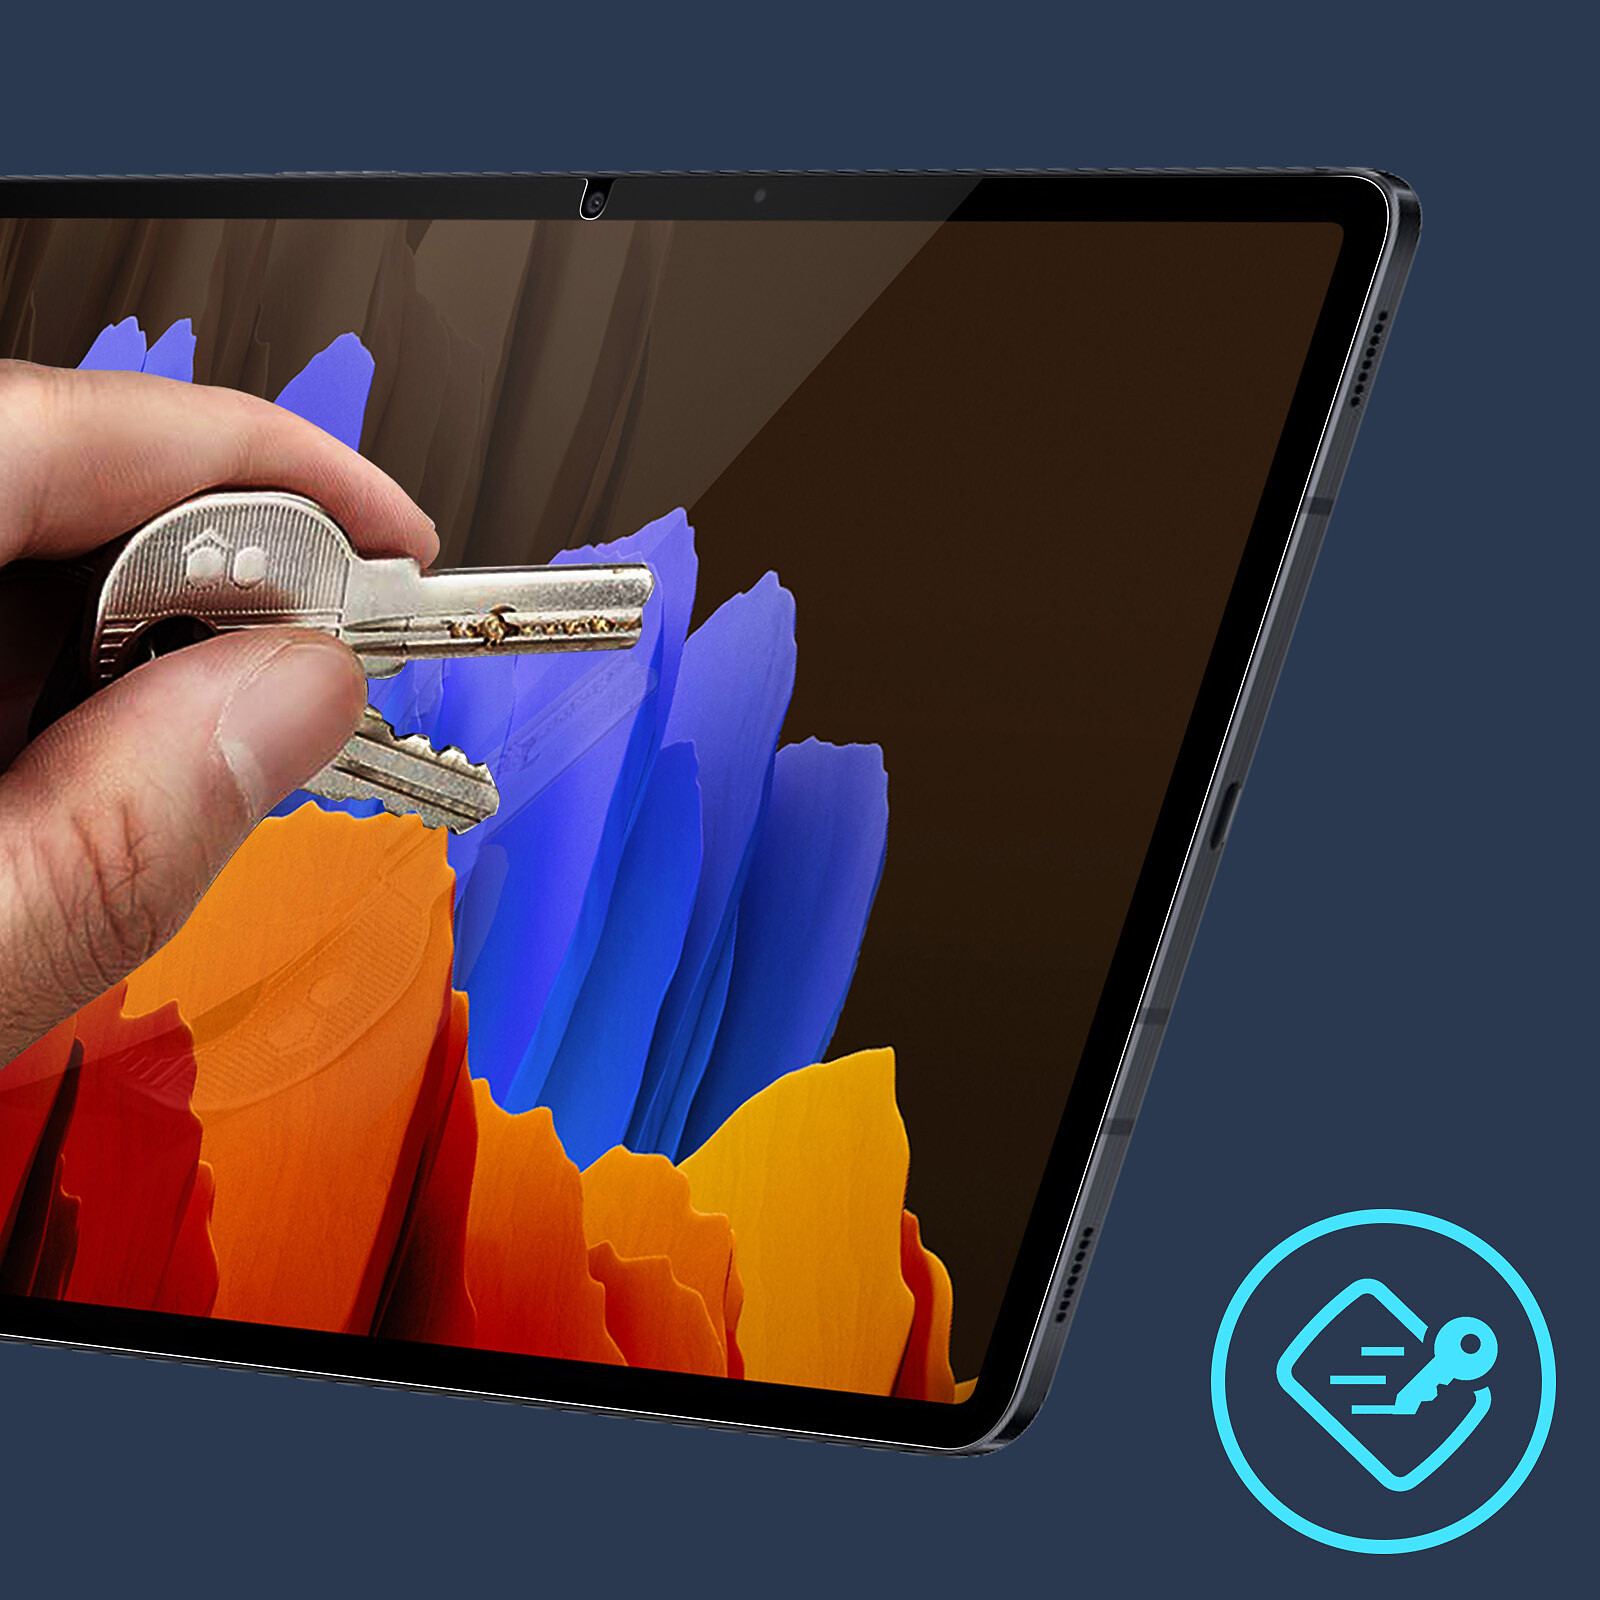 Protège écran AVIZAR Verre Trempé Samsung Galaxy Tab A9 Plus